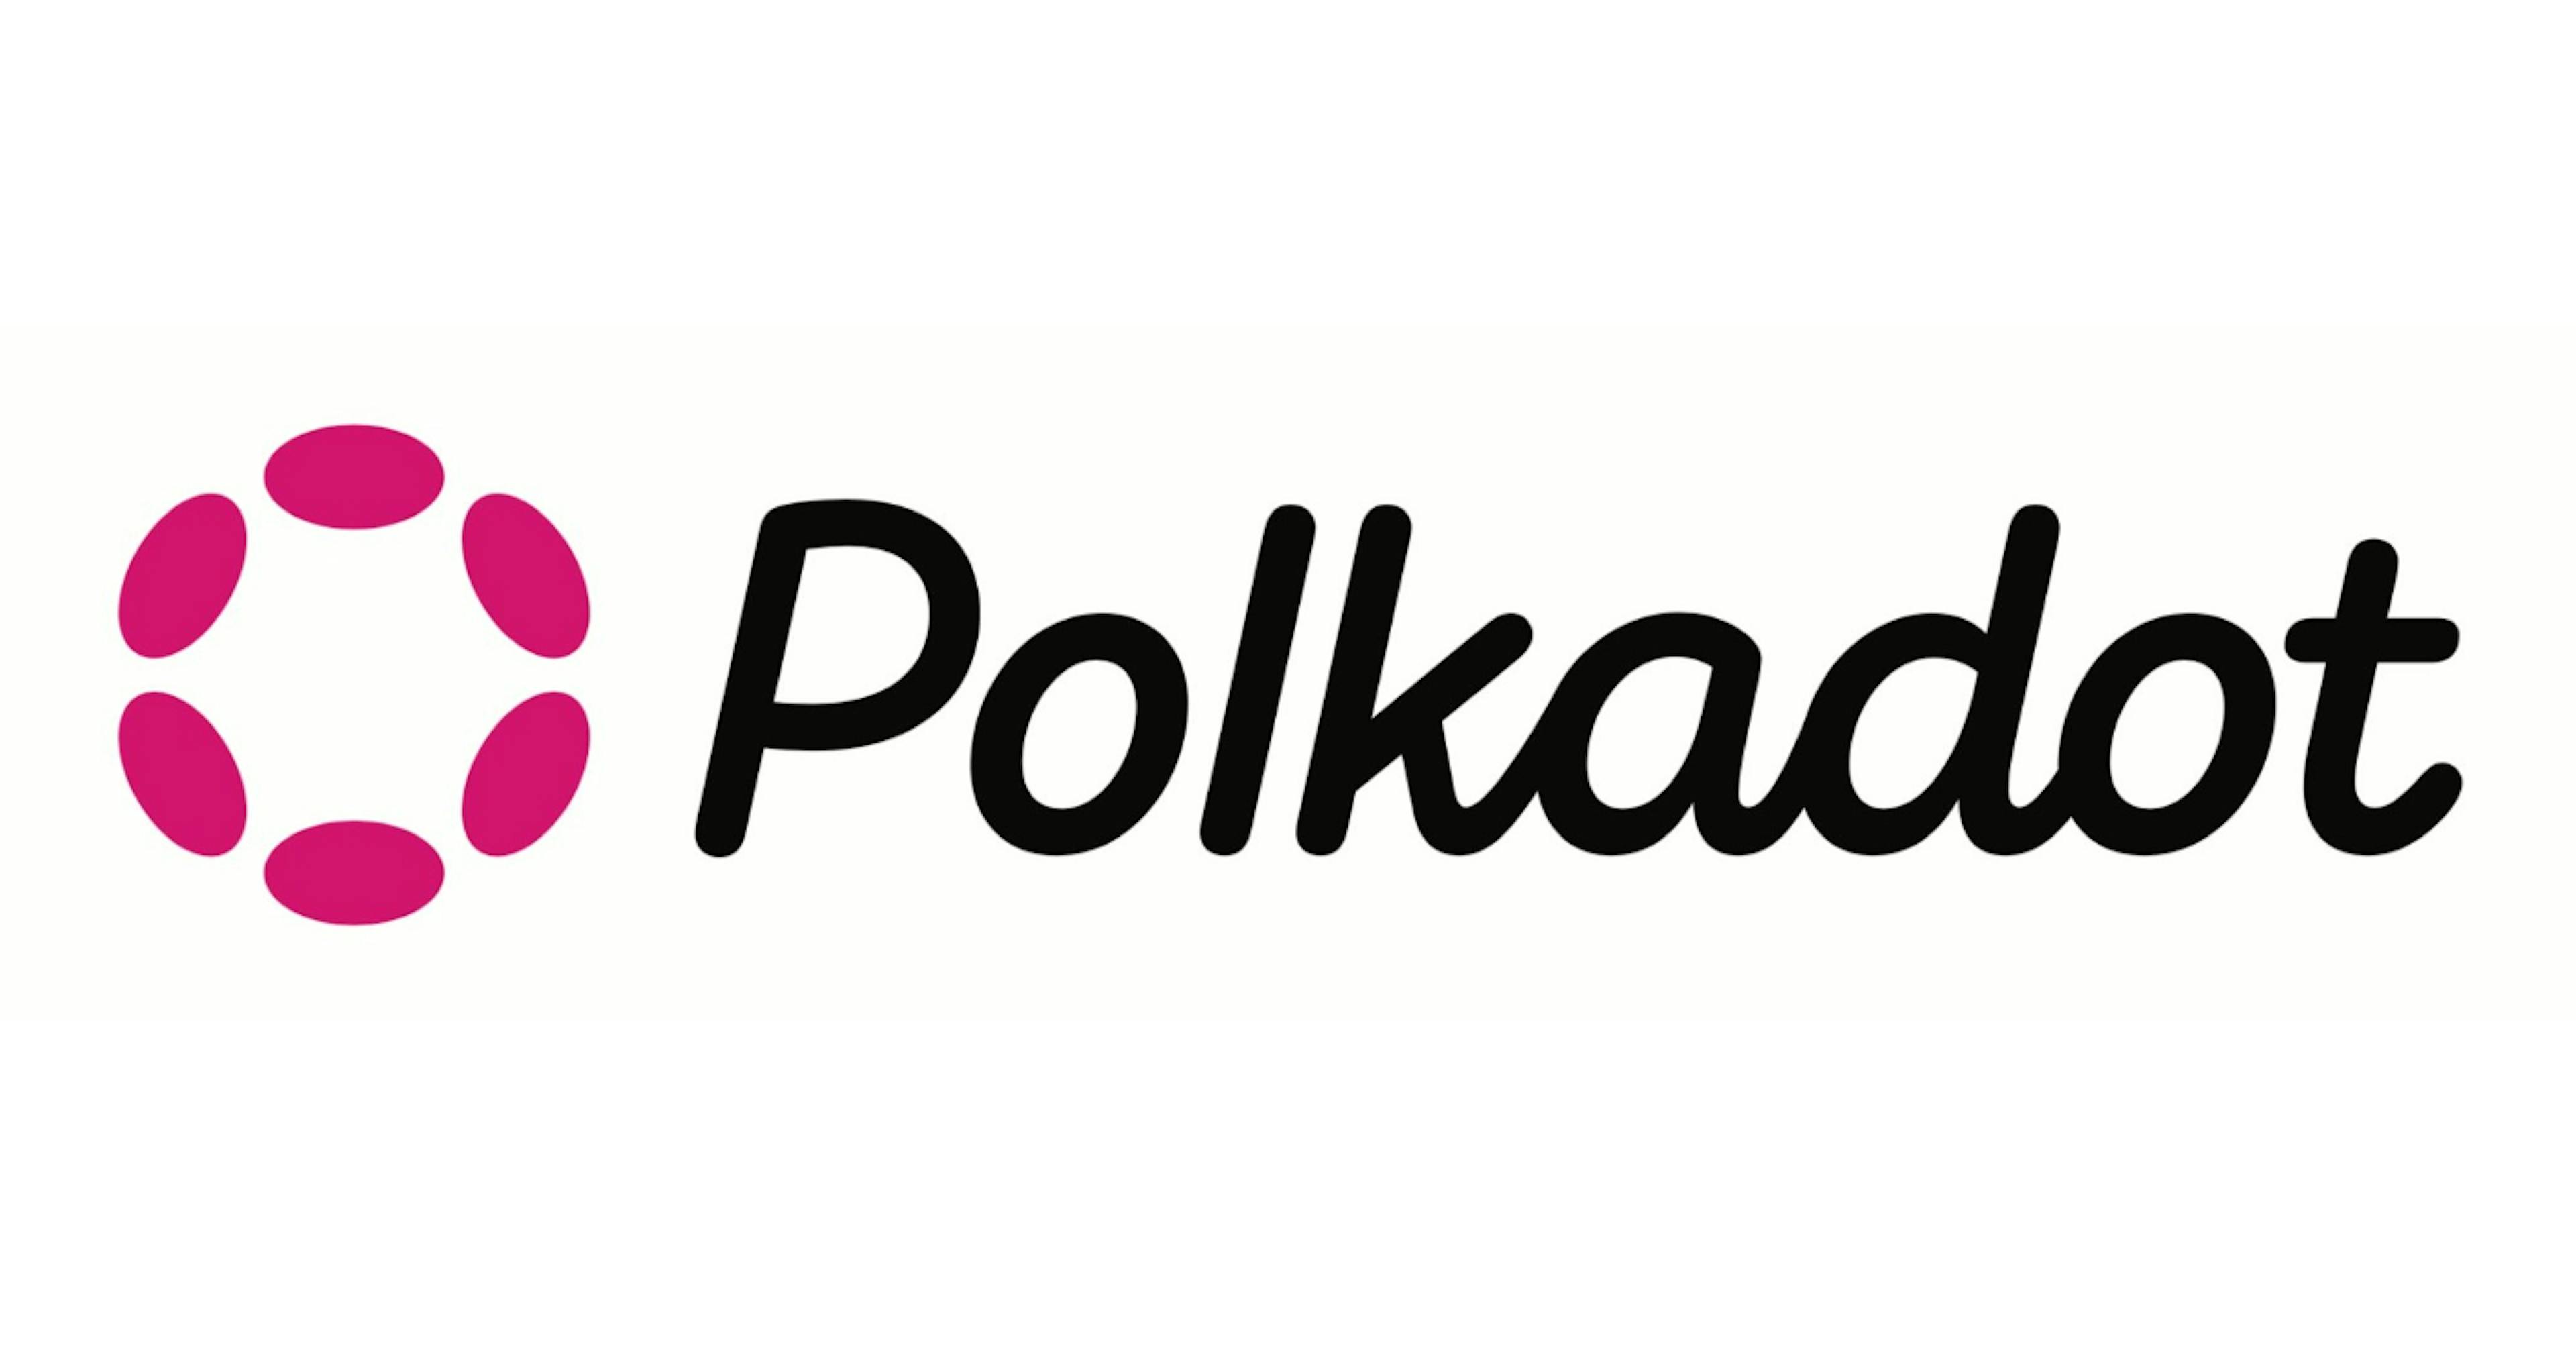 featured image - Um guia para compreender a camada 0: como funciona o ecossistema Polkadot